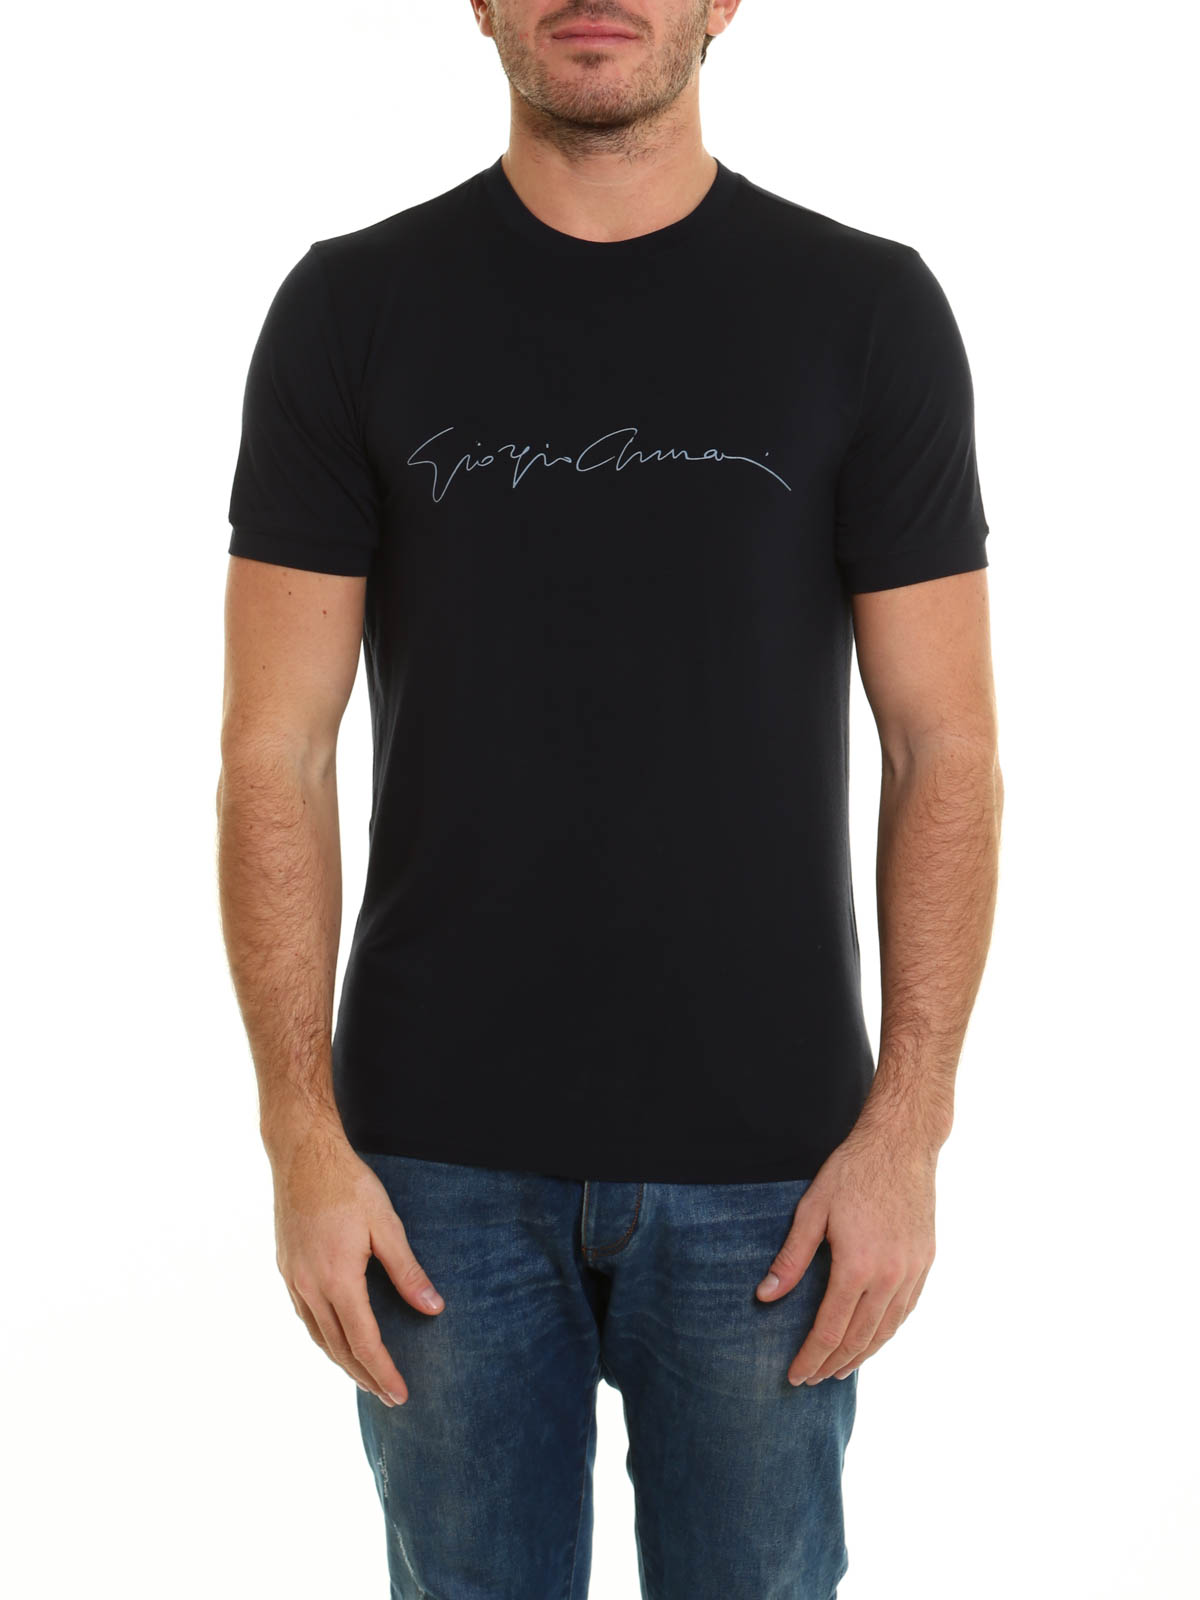 T-shirts Giorgio Armani - T-Shirt Fur Herren - Blau - 3YST56SJP4Z0922